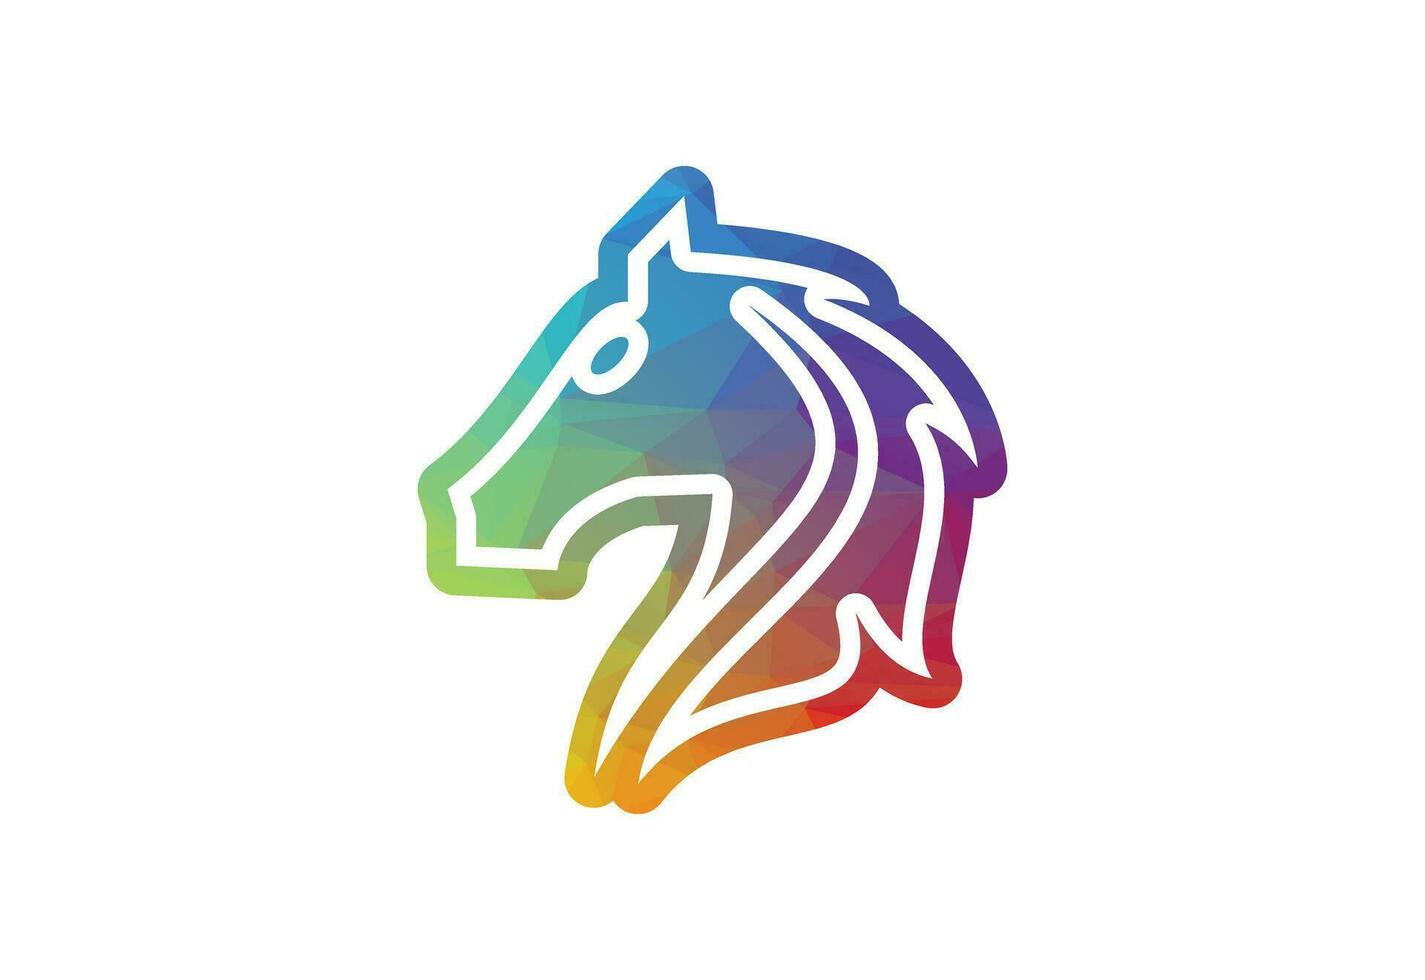 Low Poly and Creative Horse head logo design vector design template